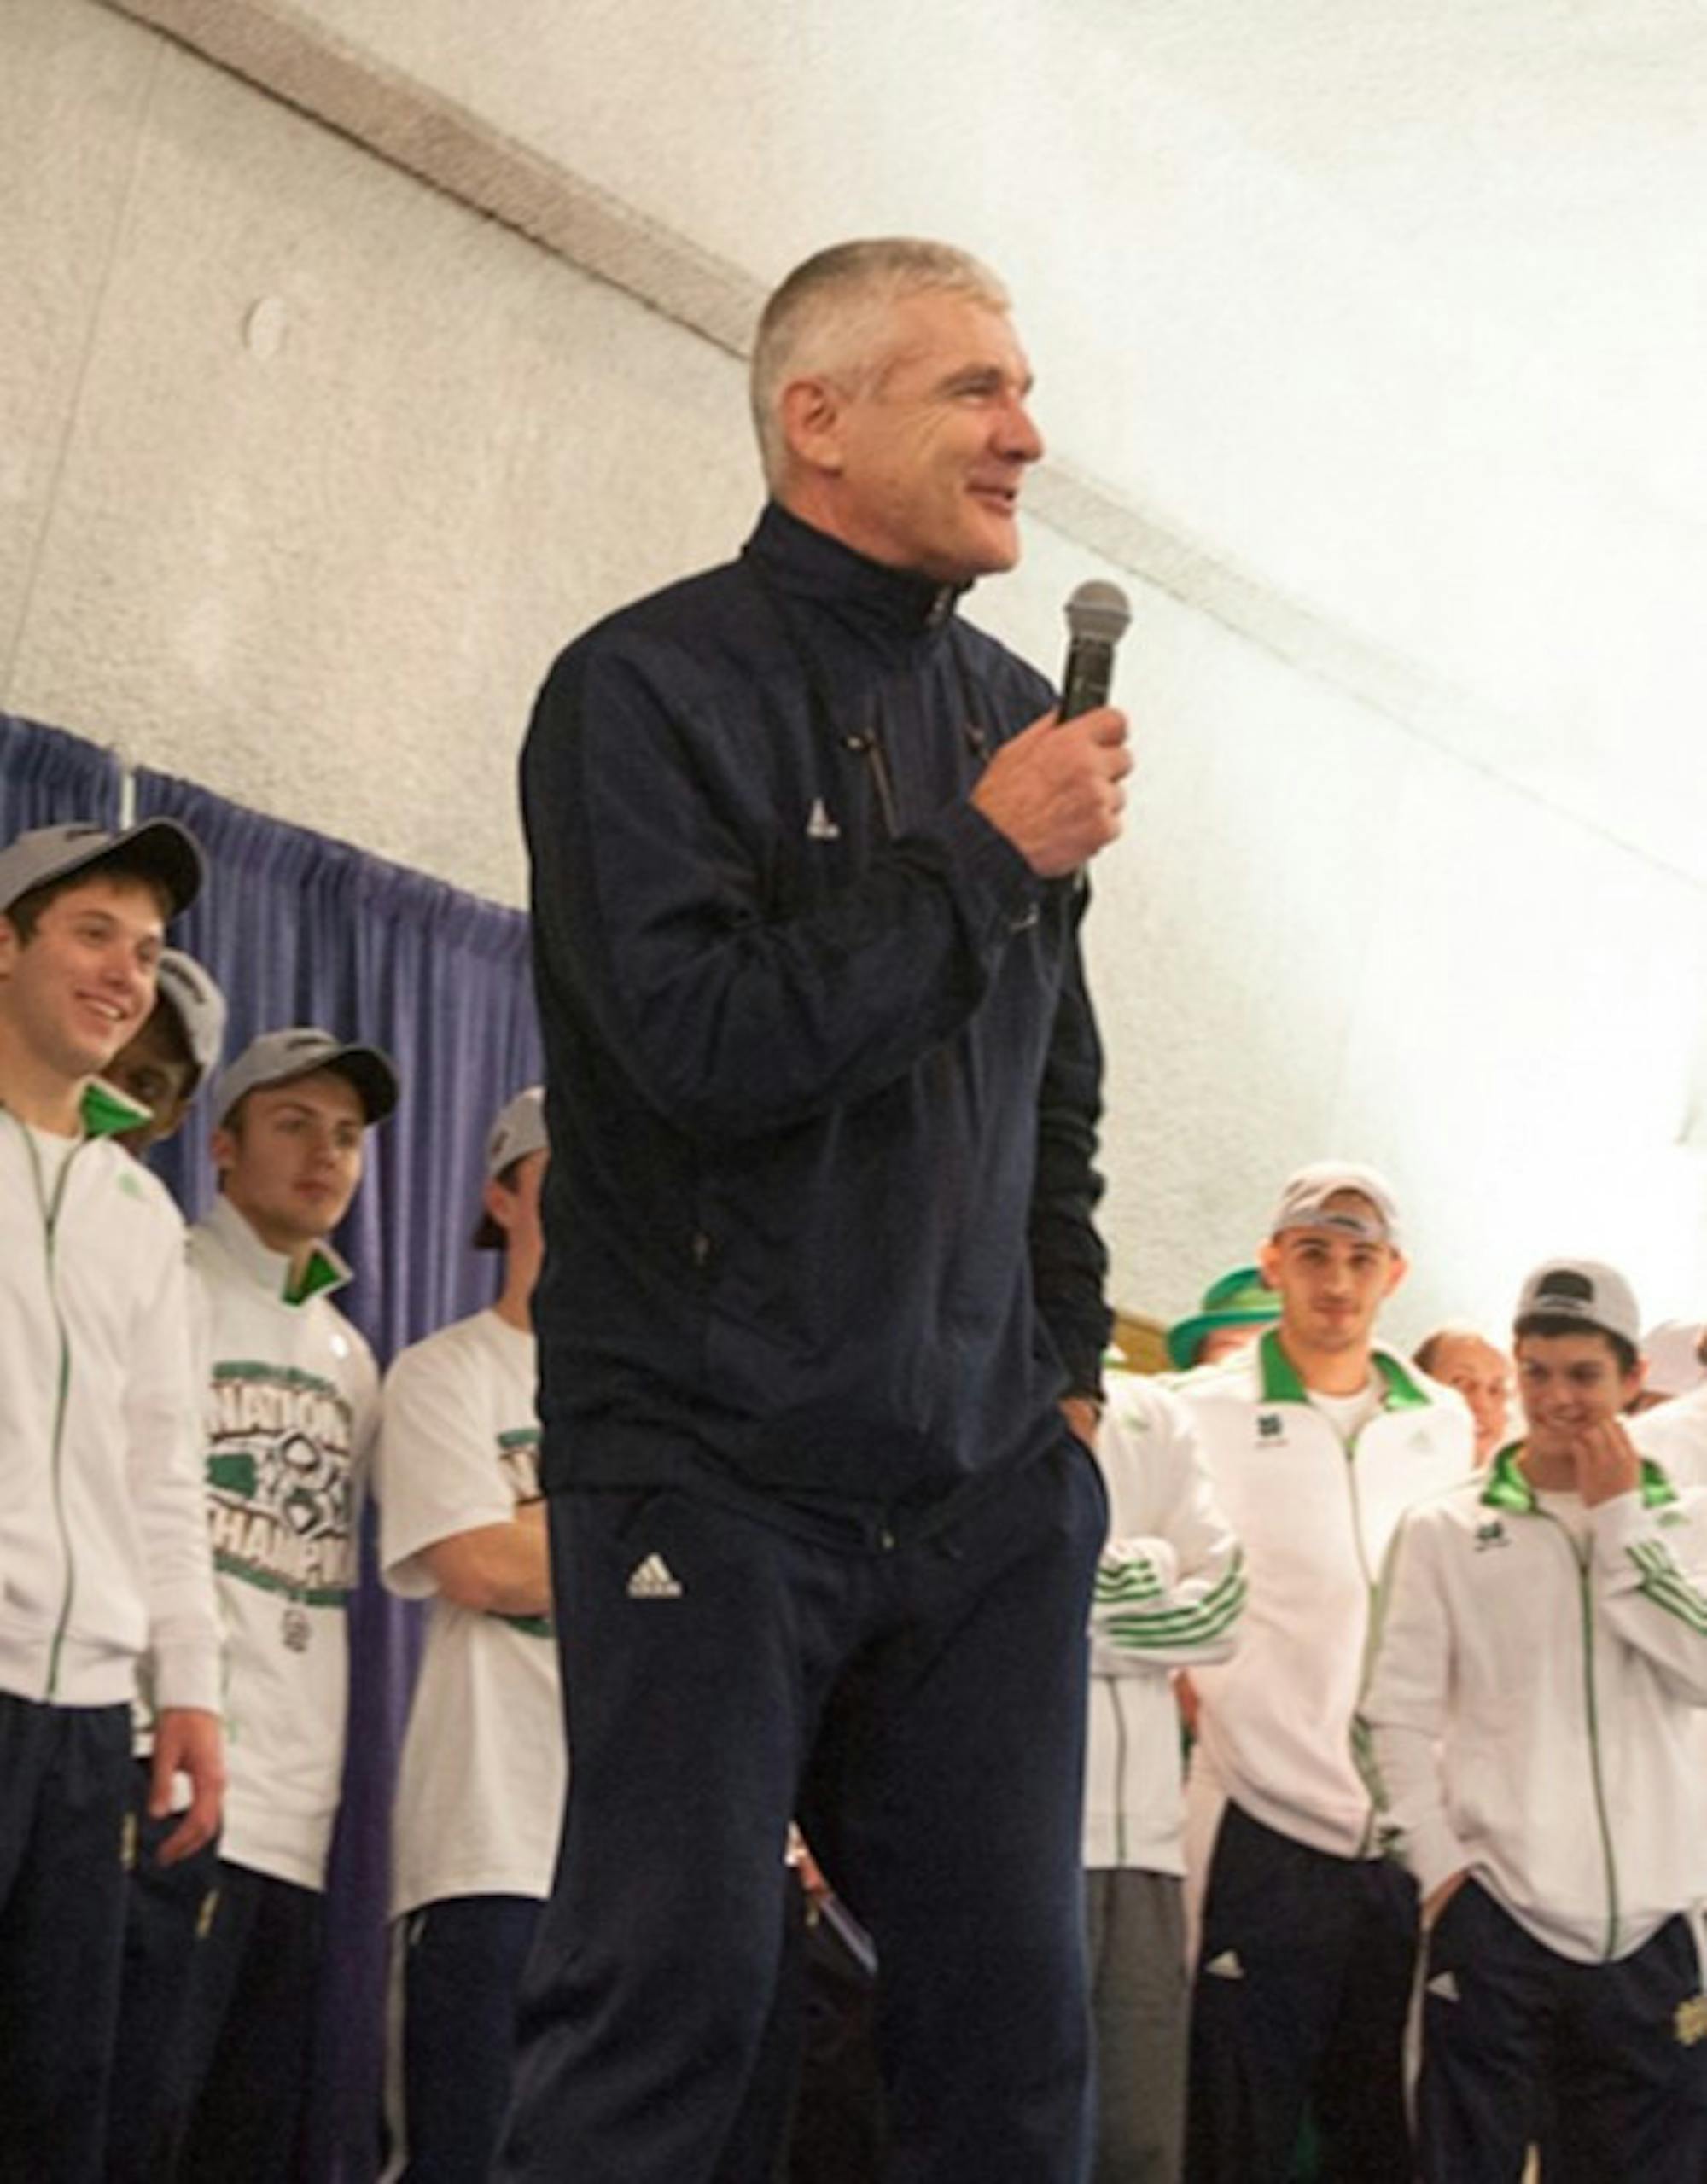 Irish coach Bobby Clark addresses the crowd during Notre Dame’s national championship celebration on Dec. 15.